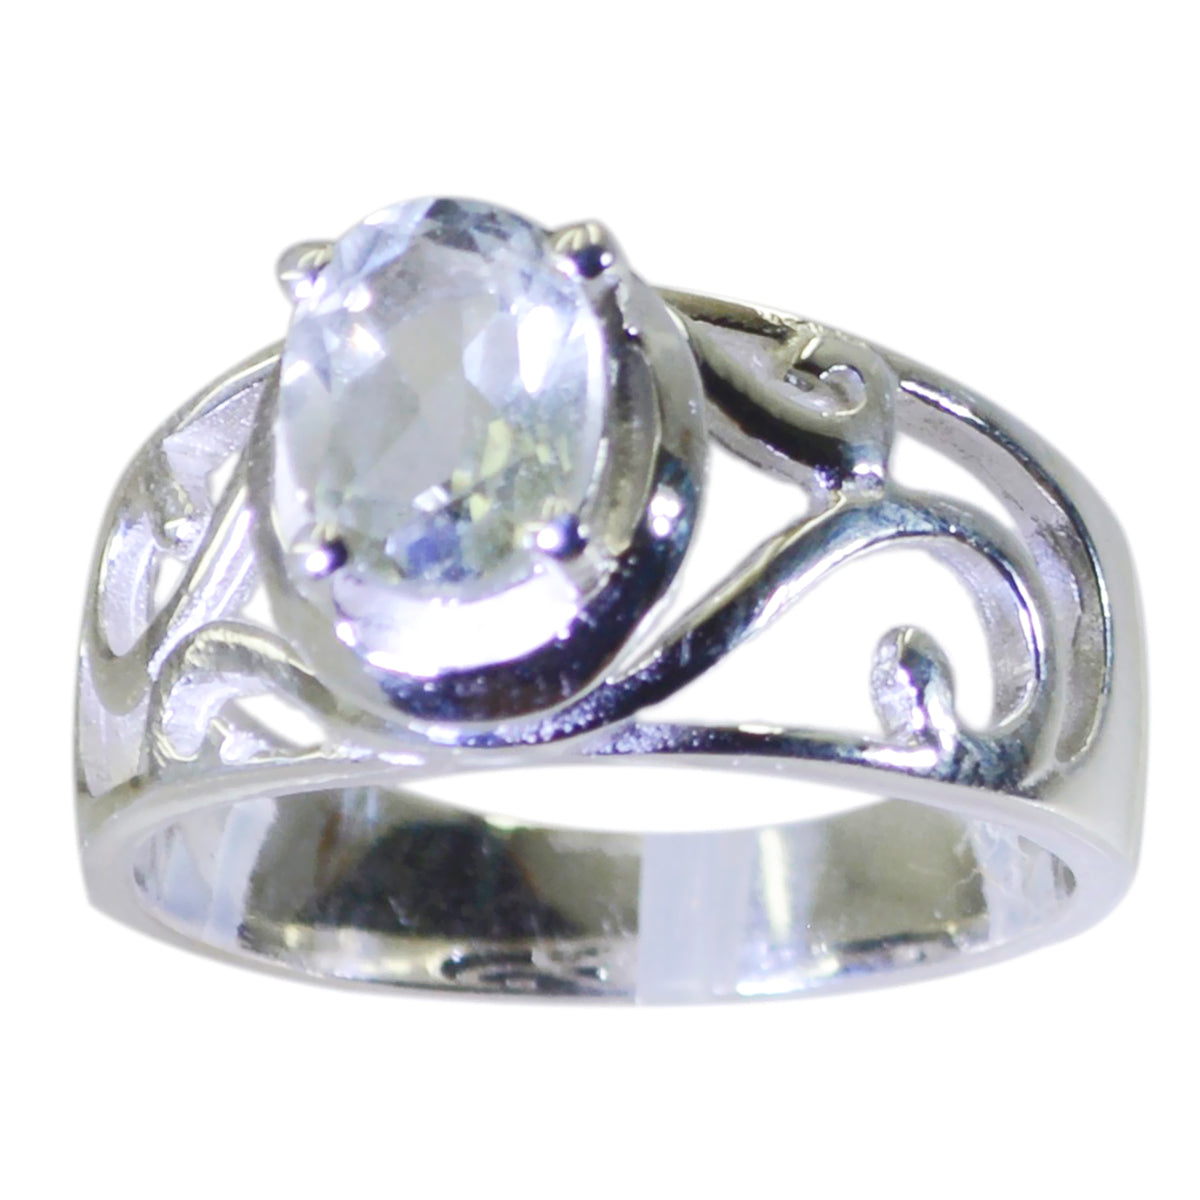 Marvelous Gemstones Green Amethyst Silver Rings Greatest Jewelry